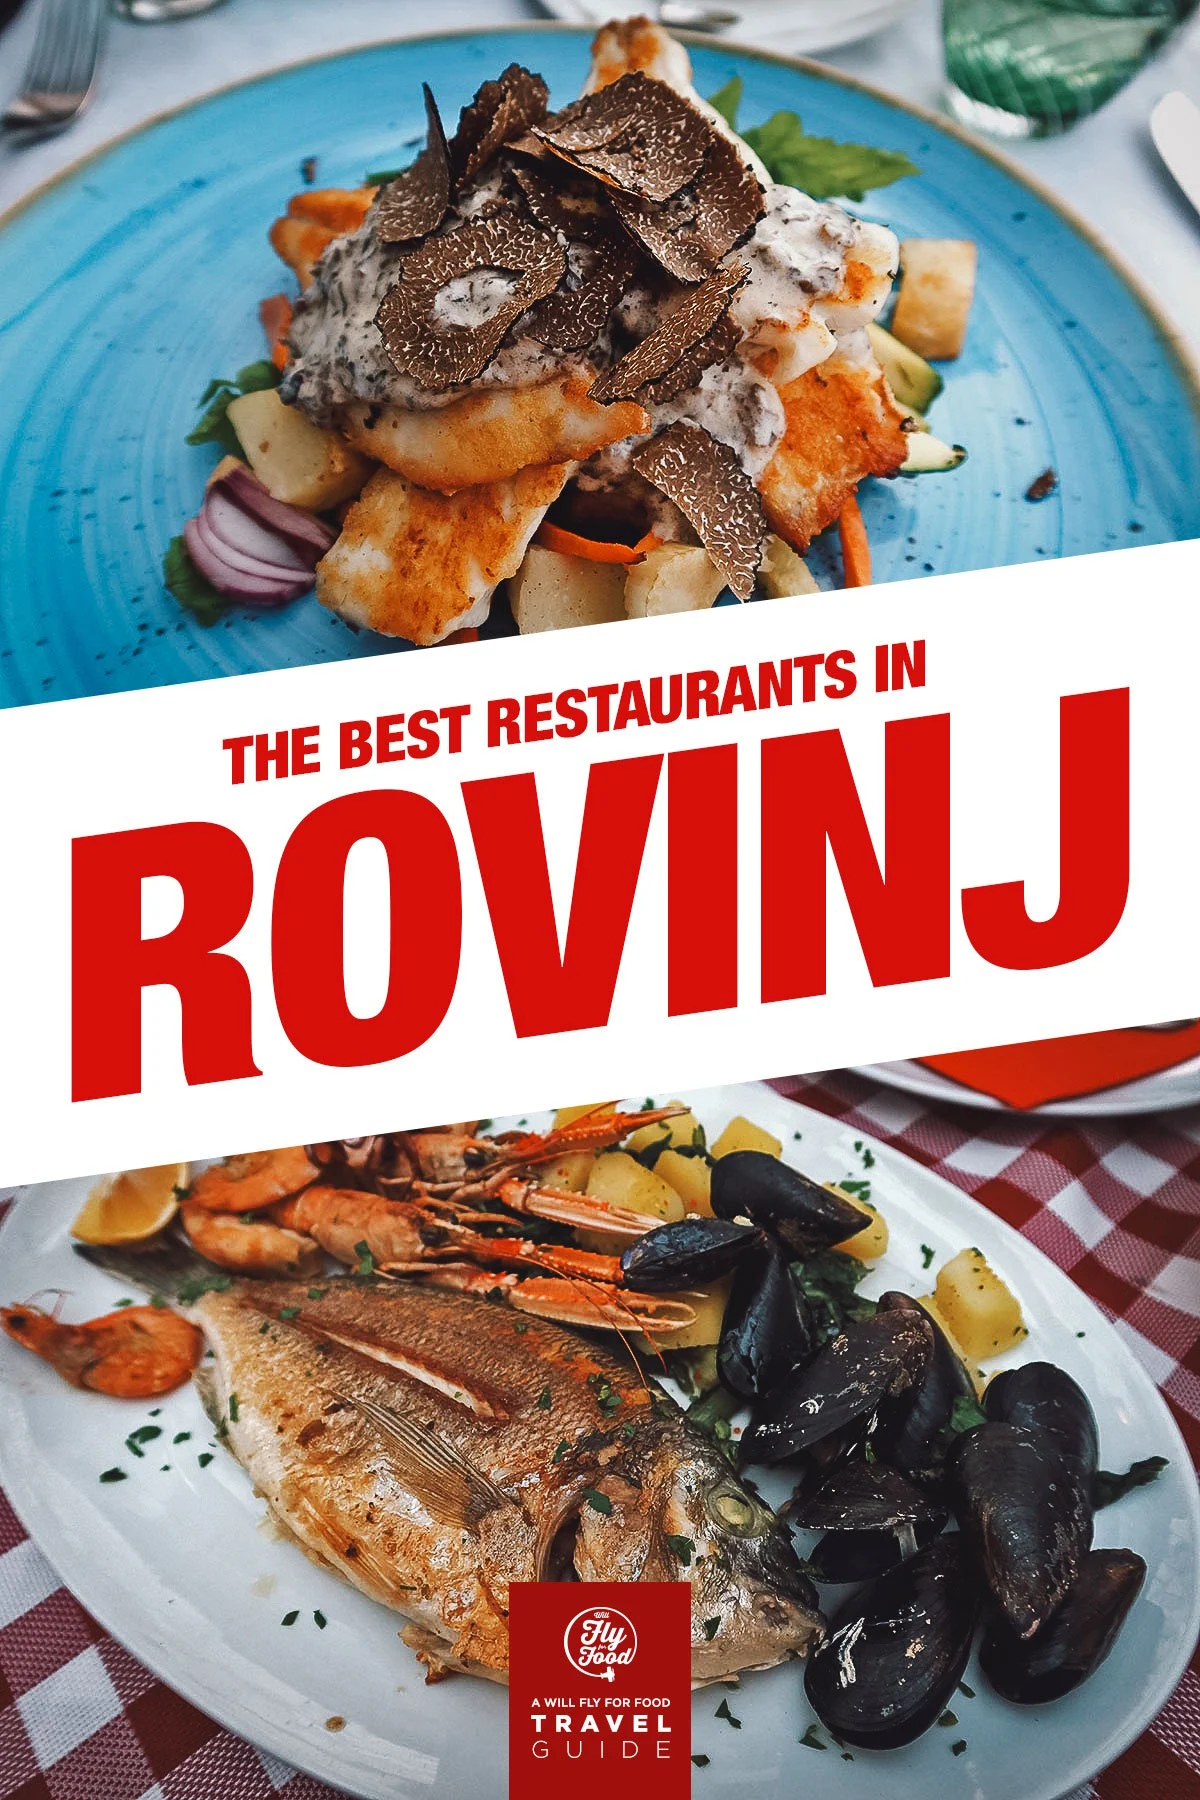 Croatian dishes at restaurants in Rovinj